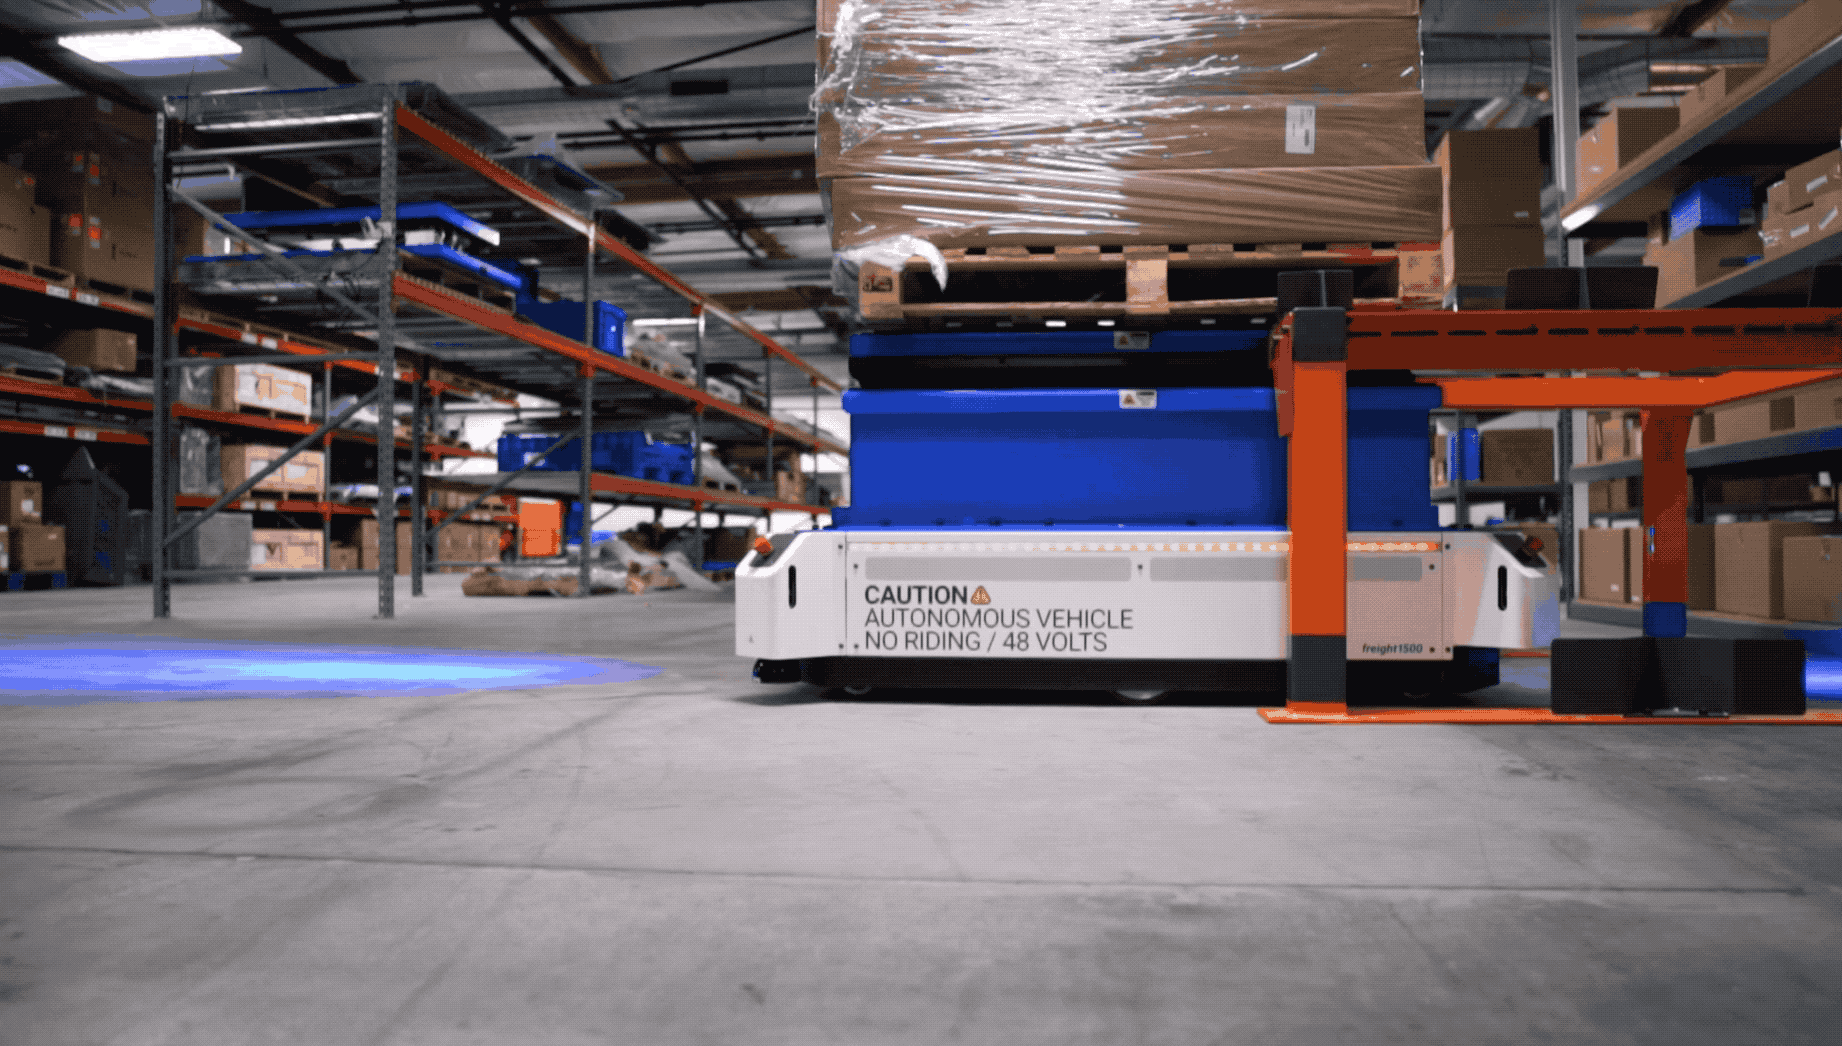 Vend tilbage Fancy kjole Medicinsk malpractice Fetch's latest warehouse robot is designed to replace forklifts | TechCrunch